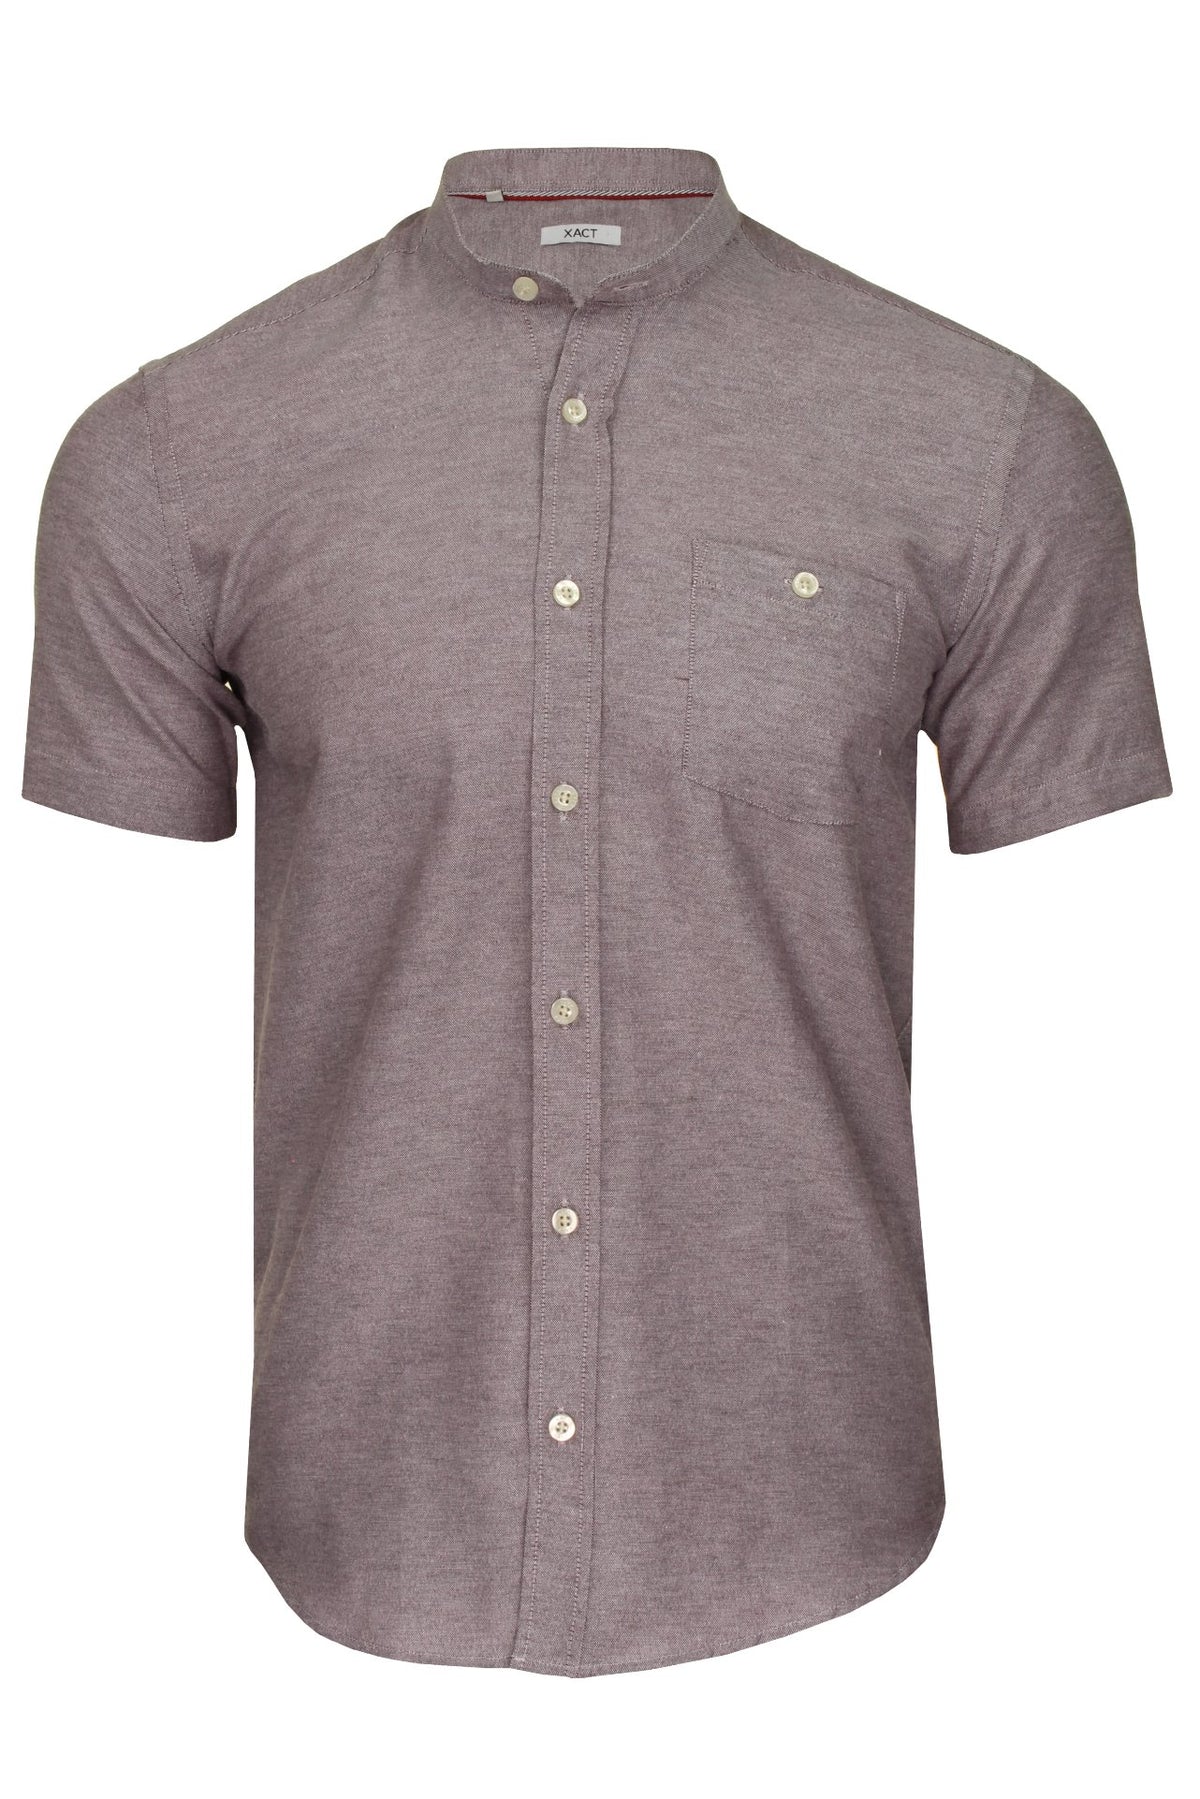 Xact Men's Grandad Collar Oxford Shirt Slim Fit Short Sleeved, 01, Xsh1022, Light Burgundy